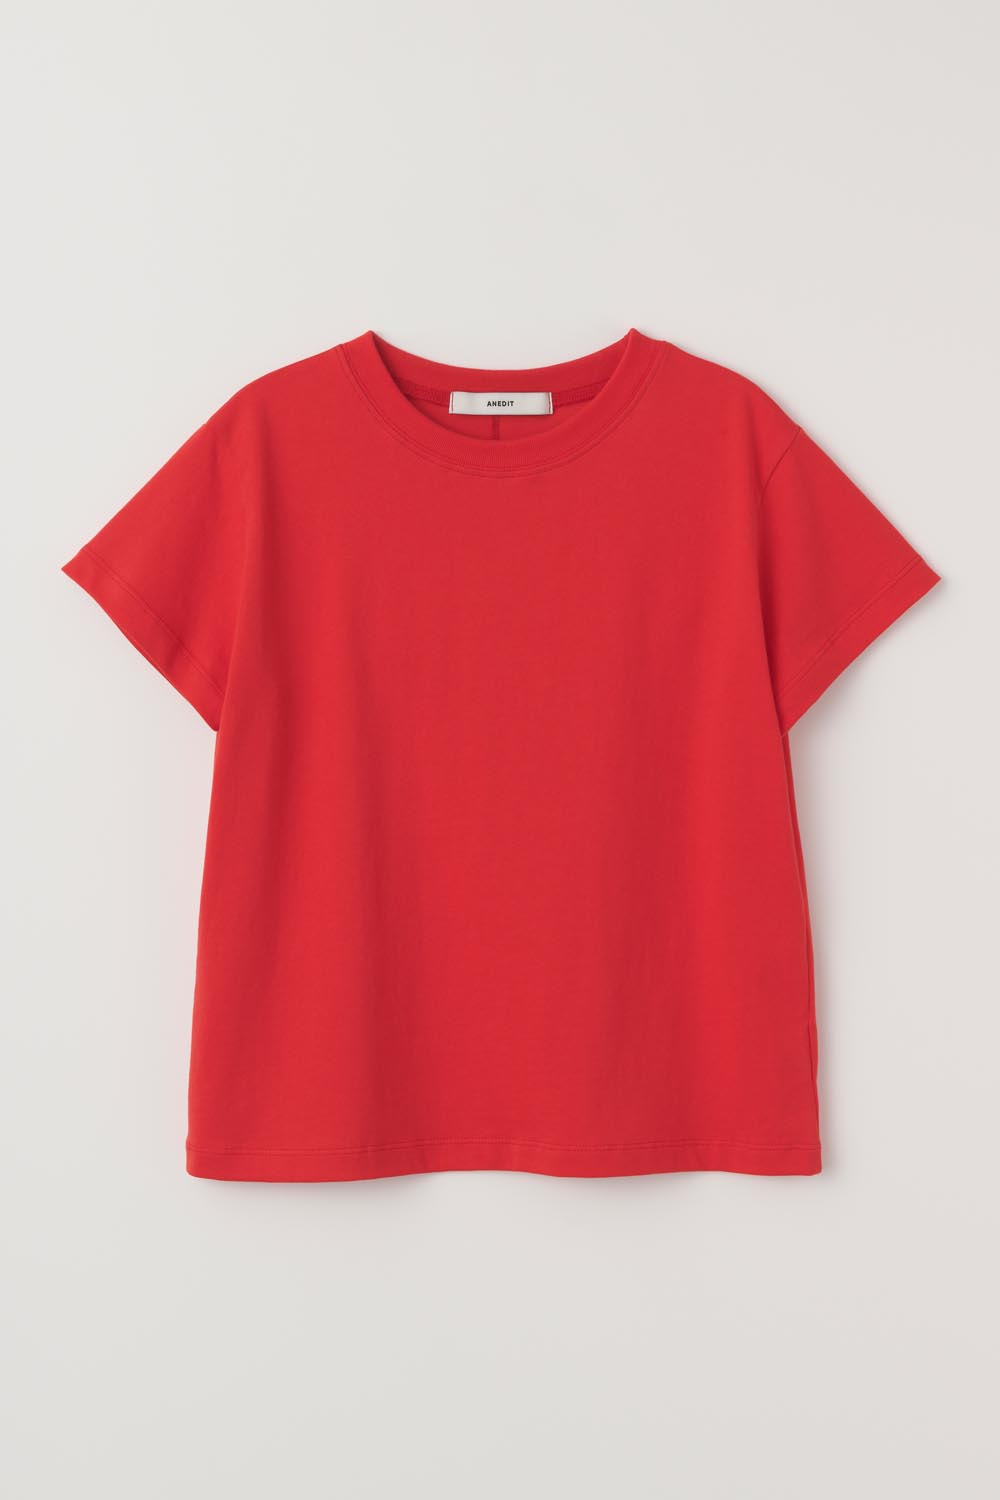 H Daily Basic Half Tshirt_Red